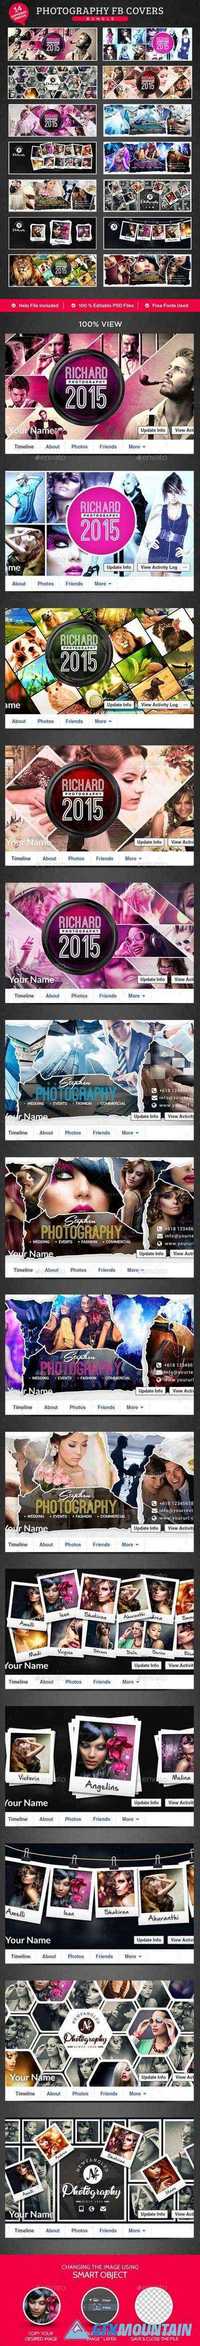 Graphicriver Photography Facebook Cover Bundle - 14 Designs 13139472